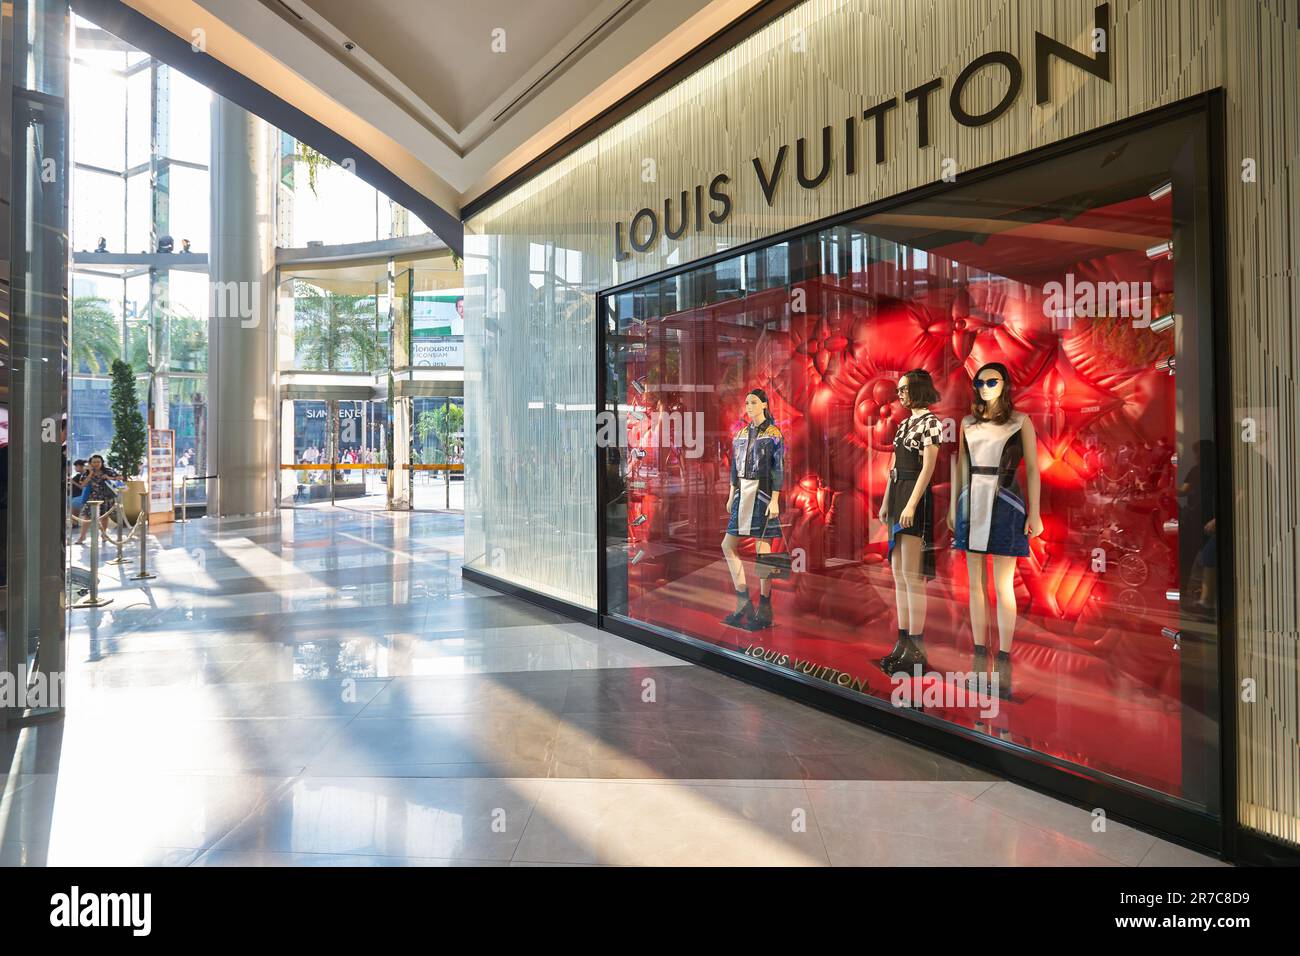 Bangkok, Thailand - April 26, 2018: Louis Vuitton Store In Bangkok